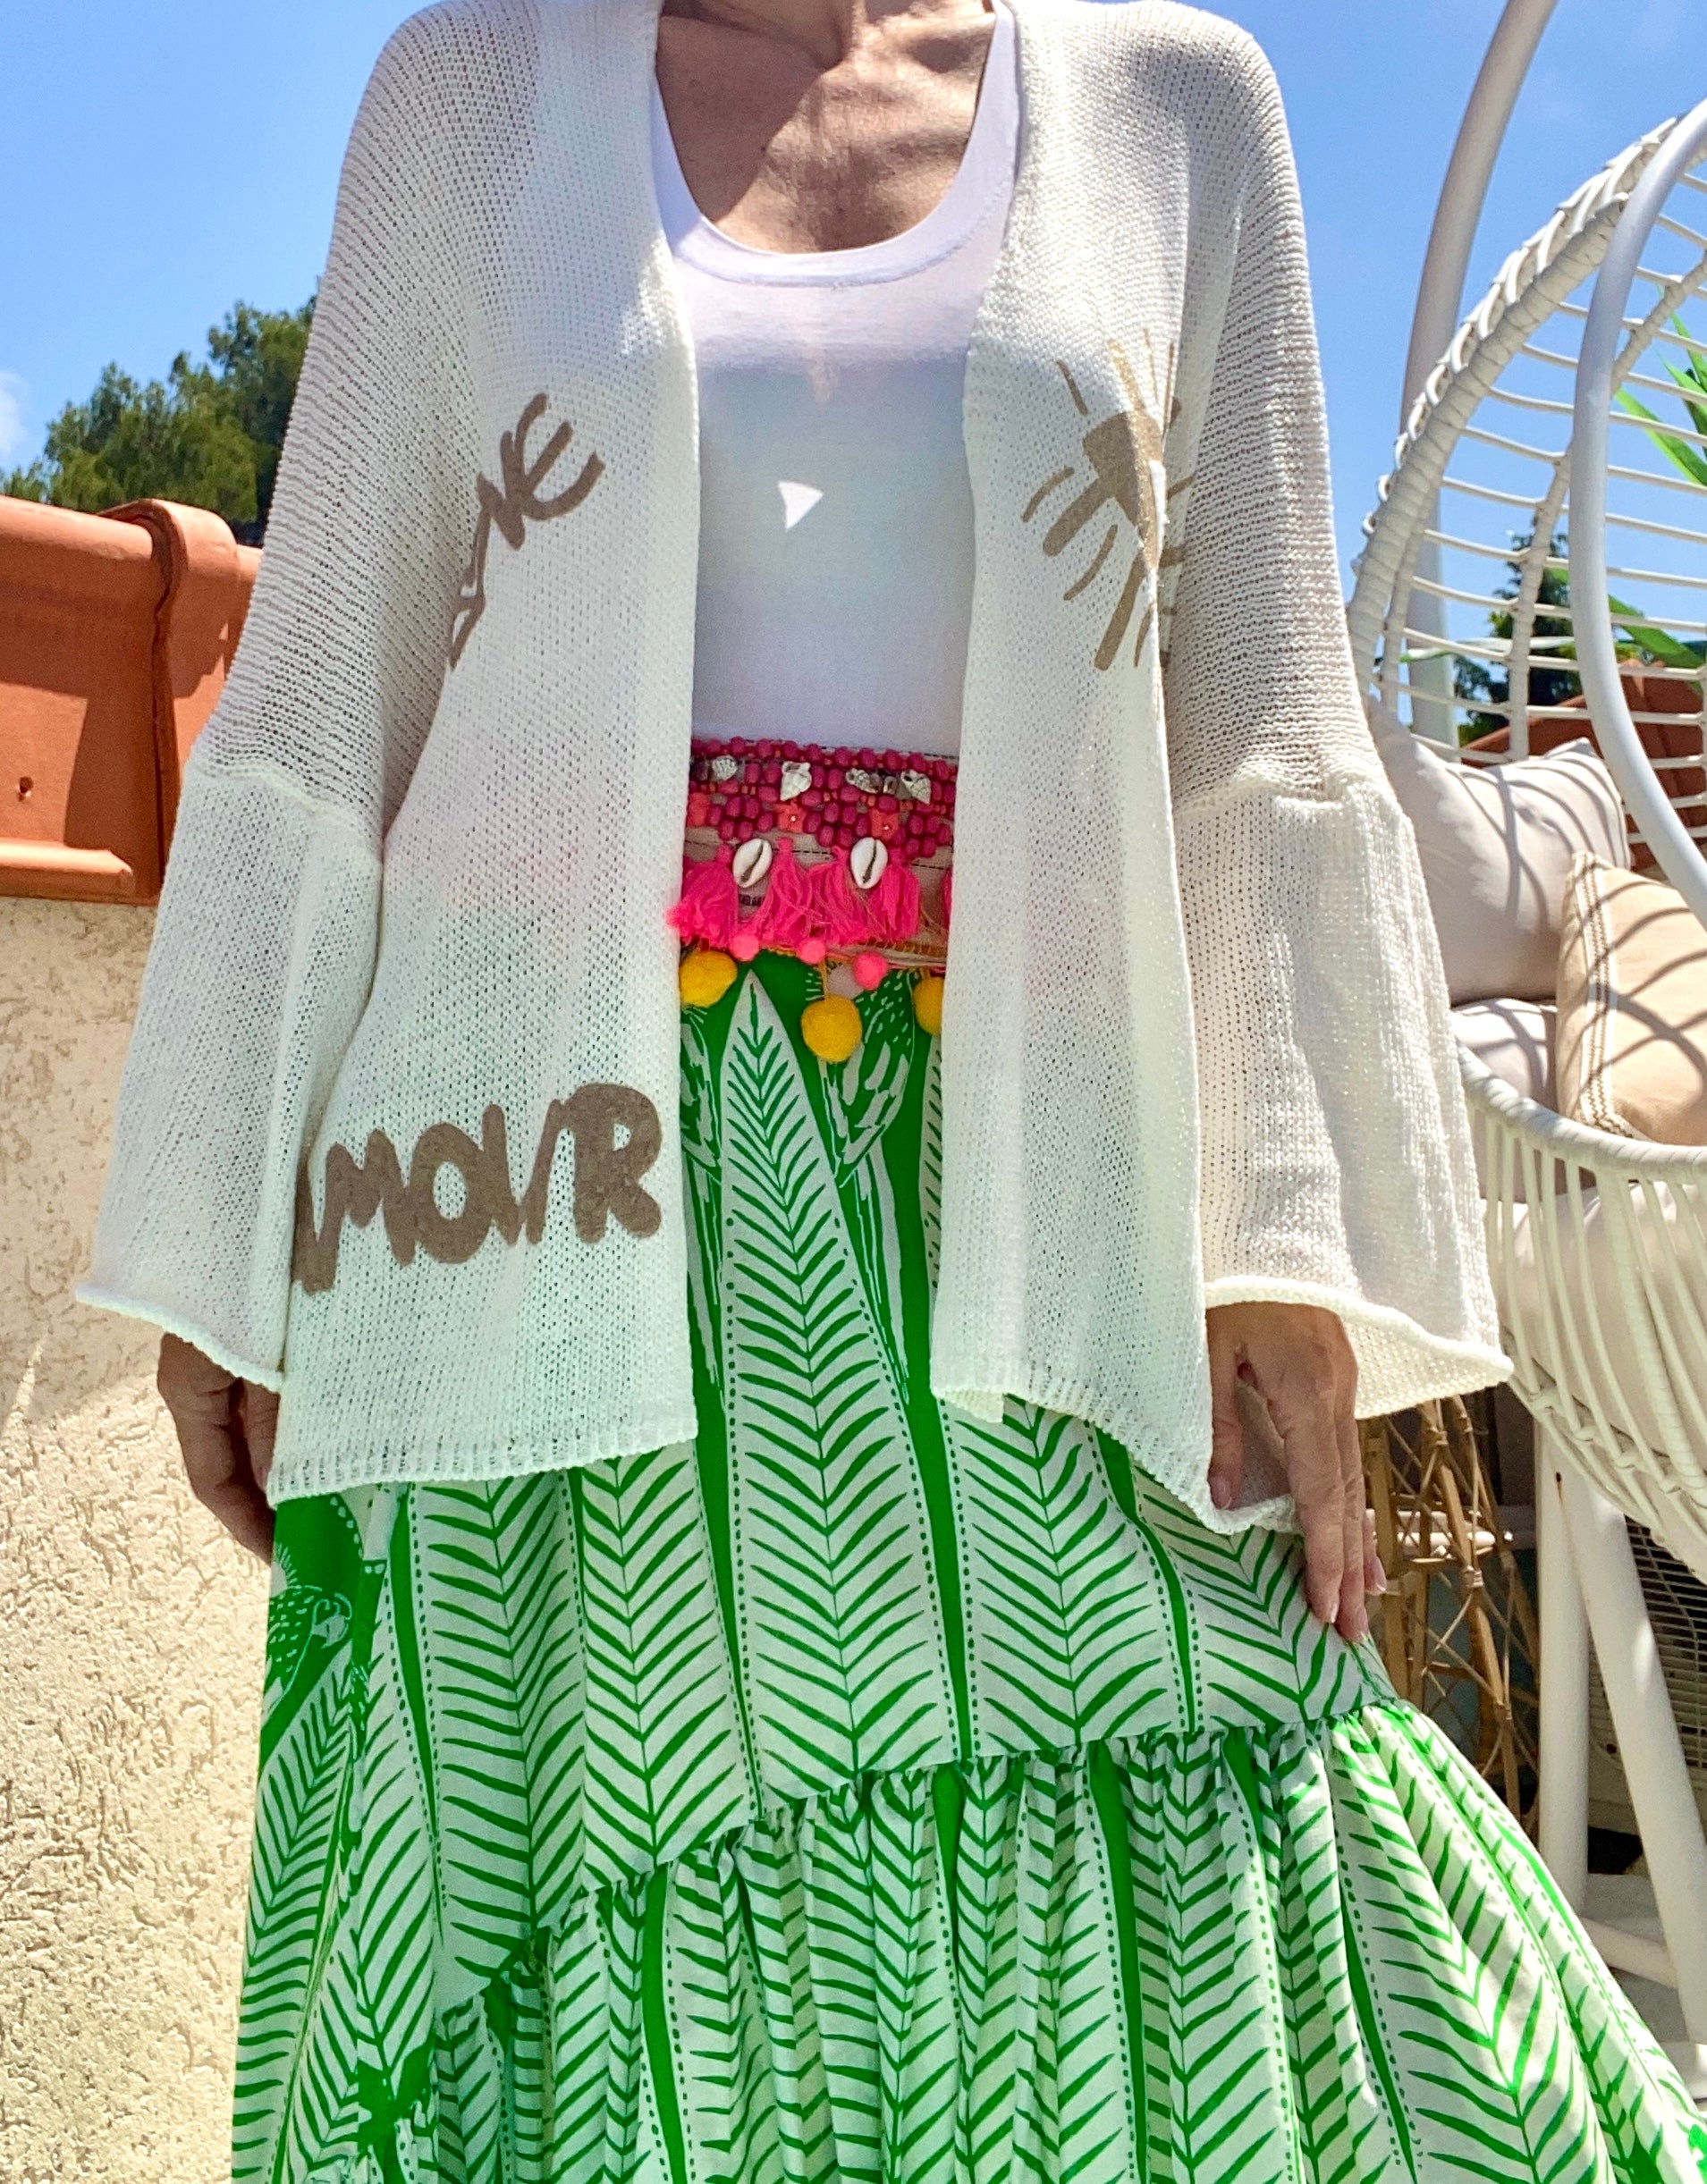 Green PALMA skirt